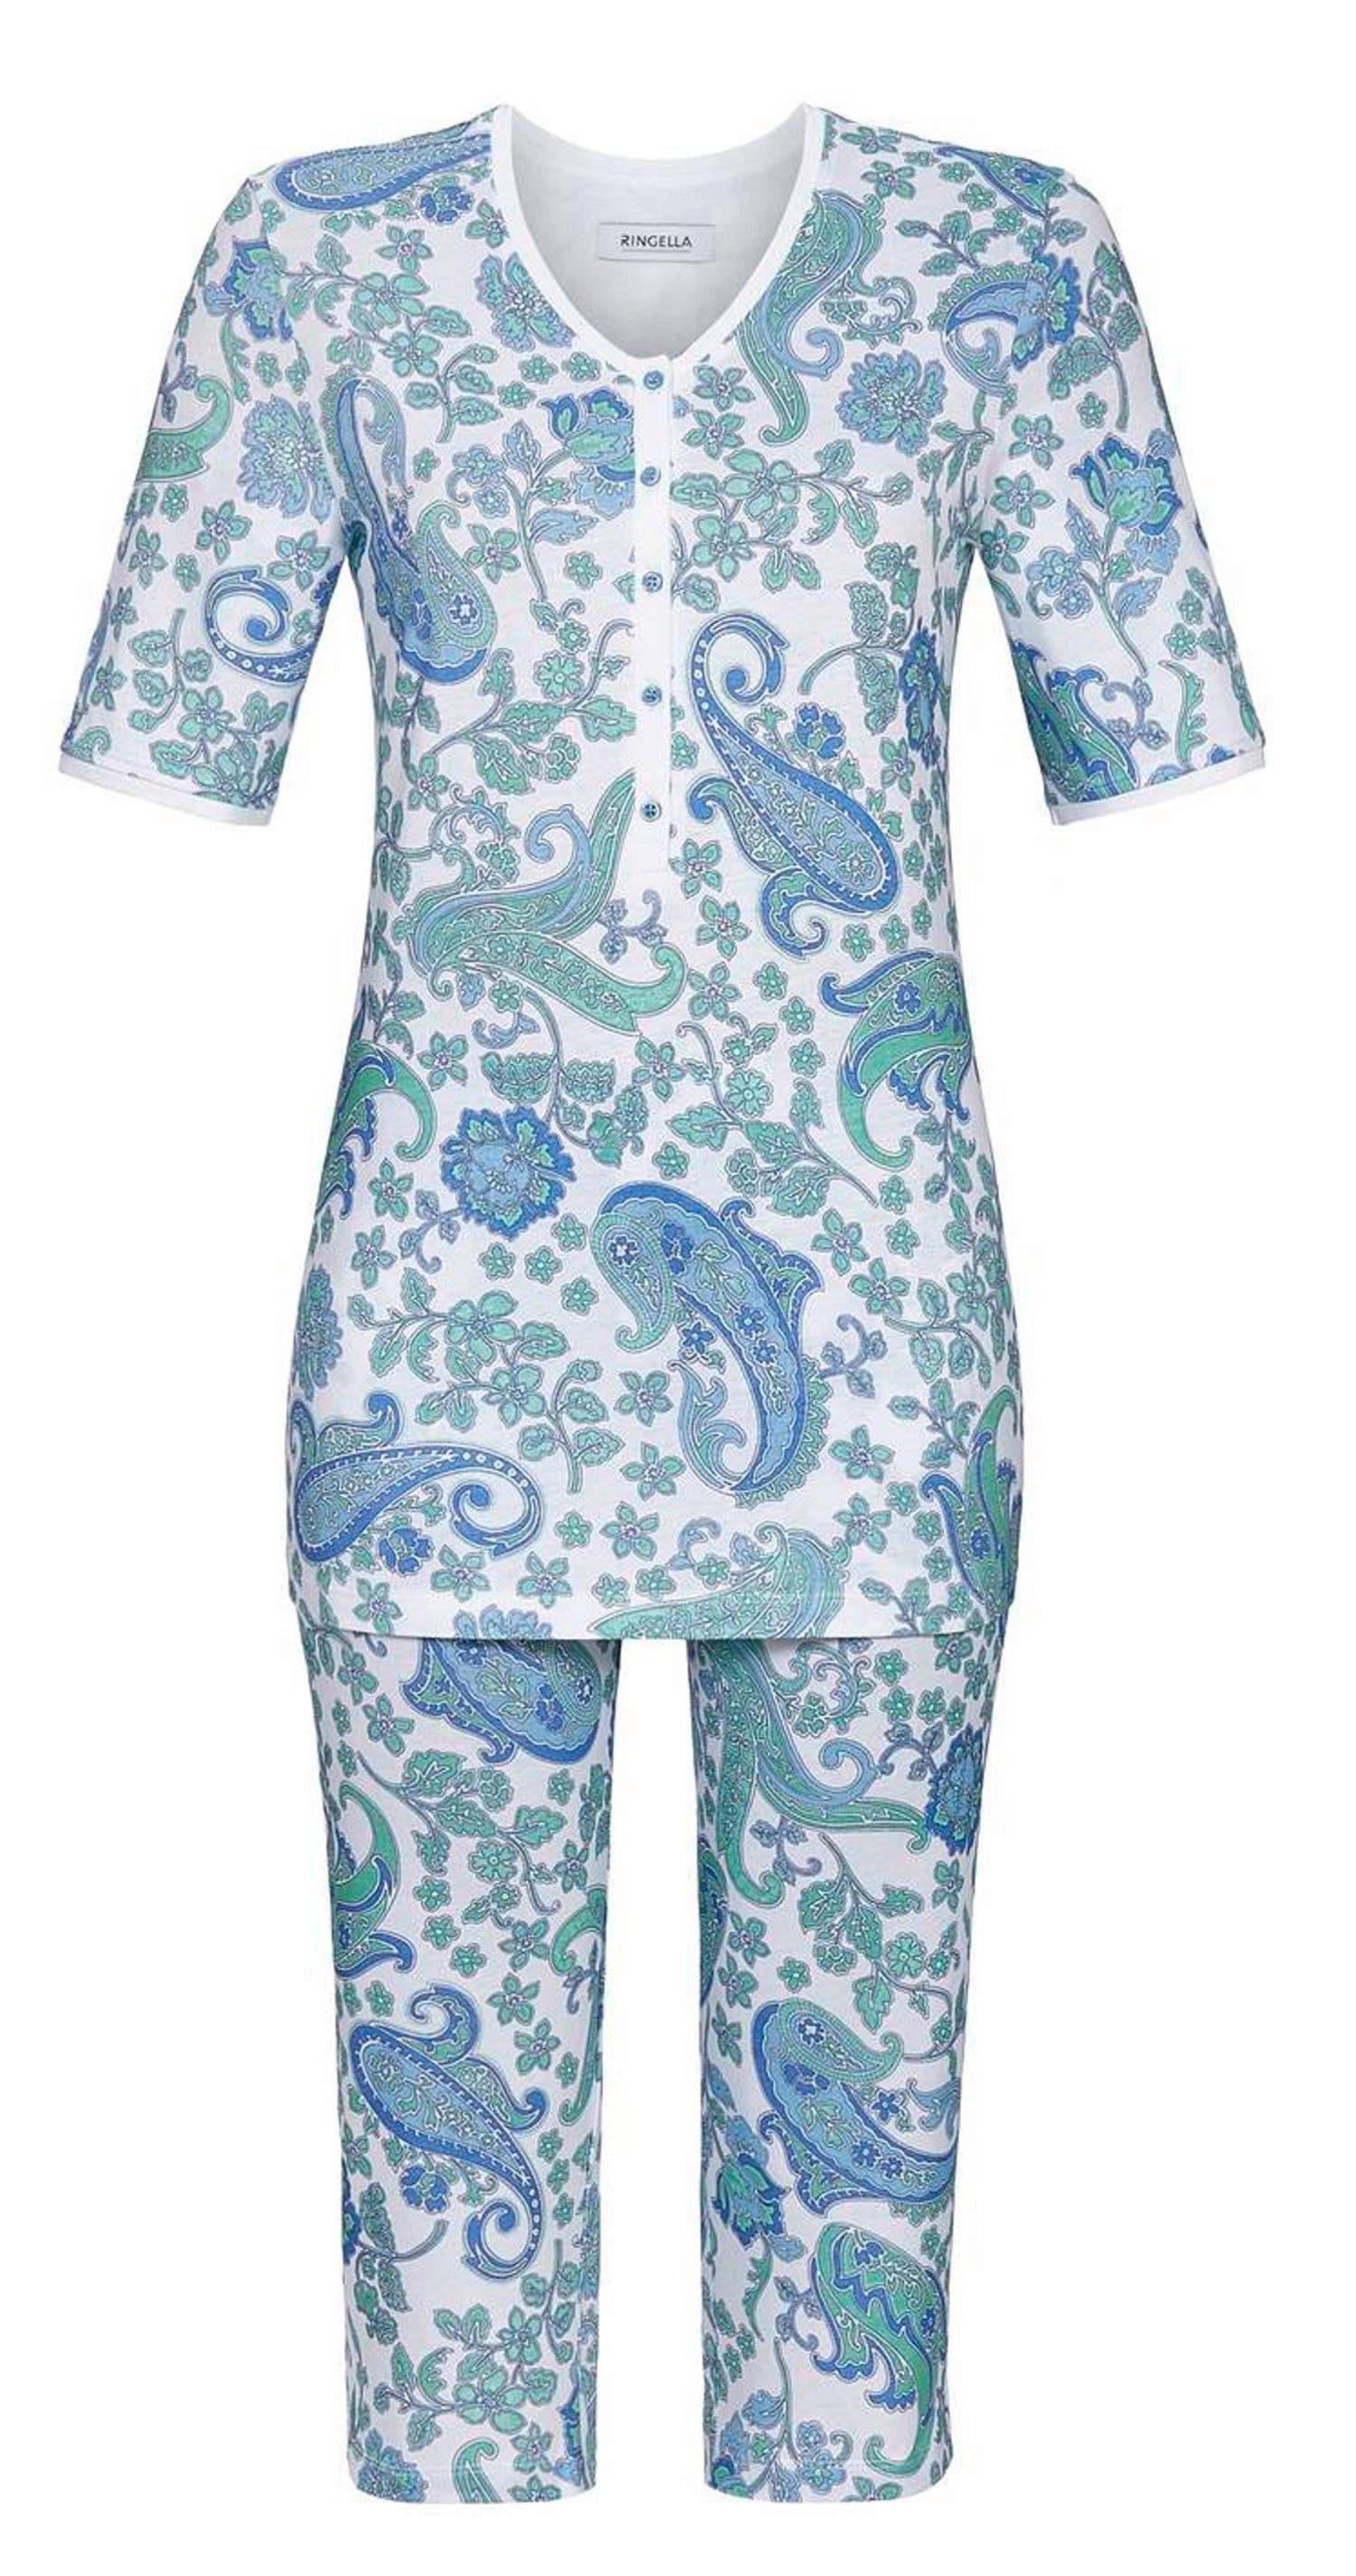 tlg) Pyjama Ringella Damen Schlafanzug (2 Paisley Muster Ringella